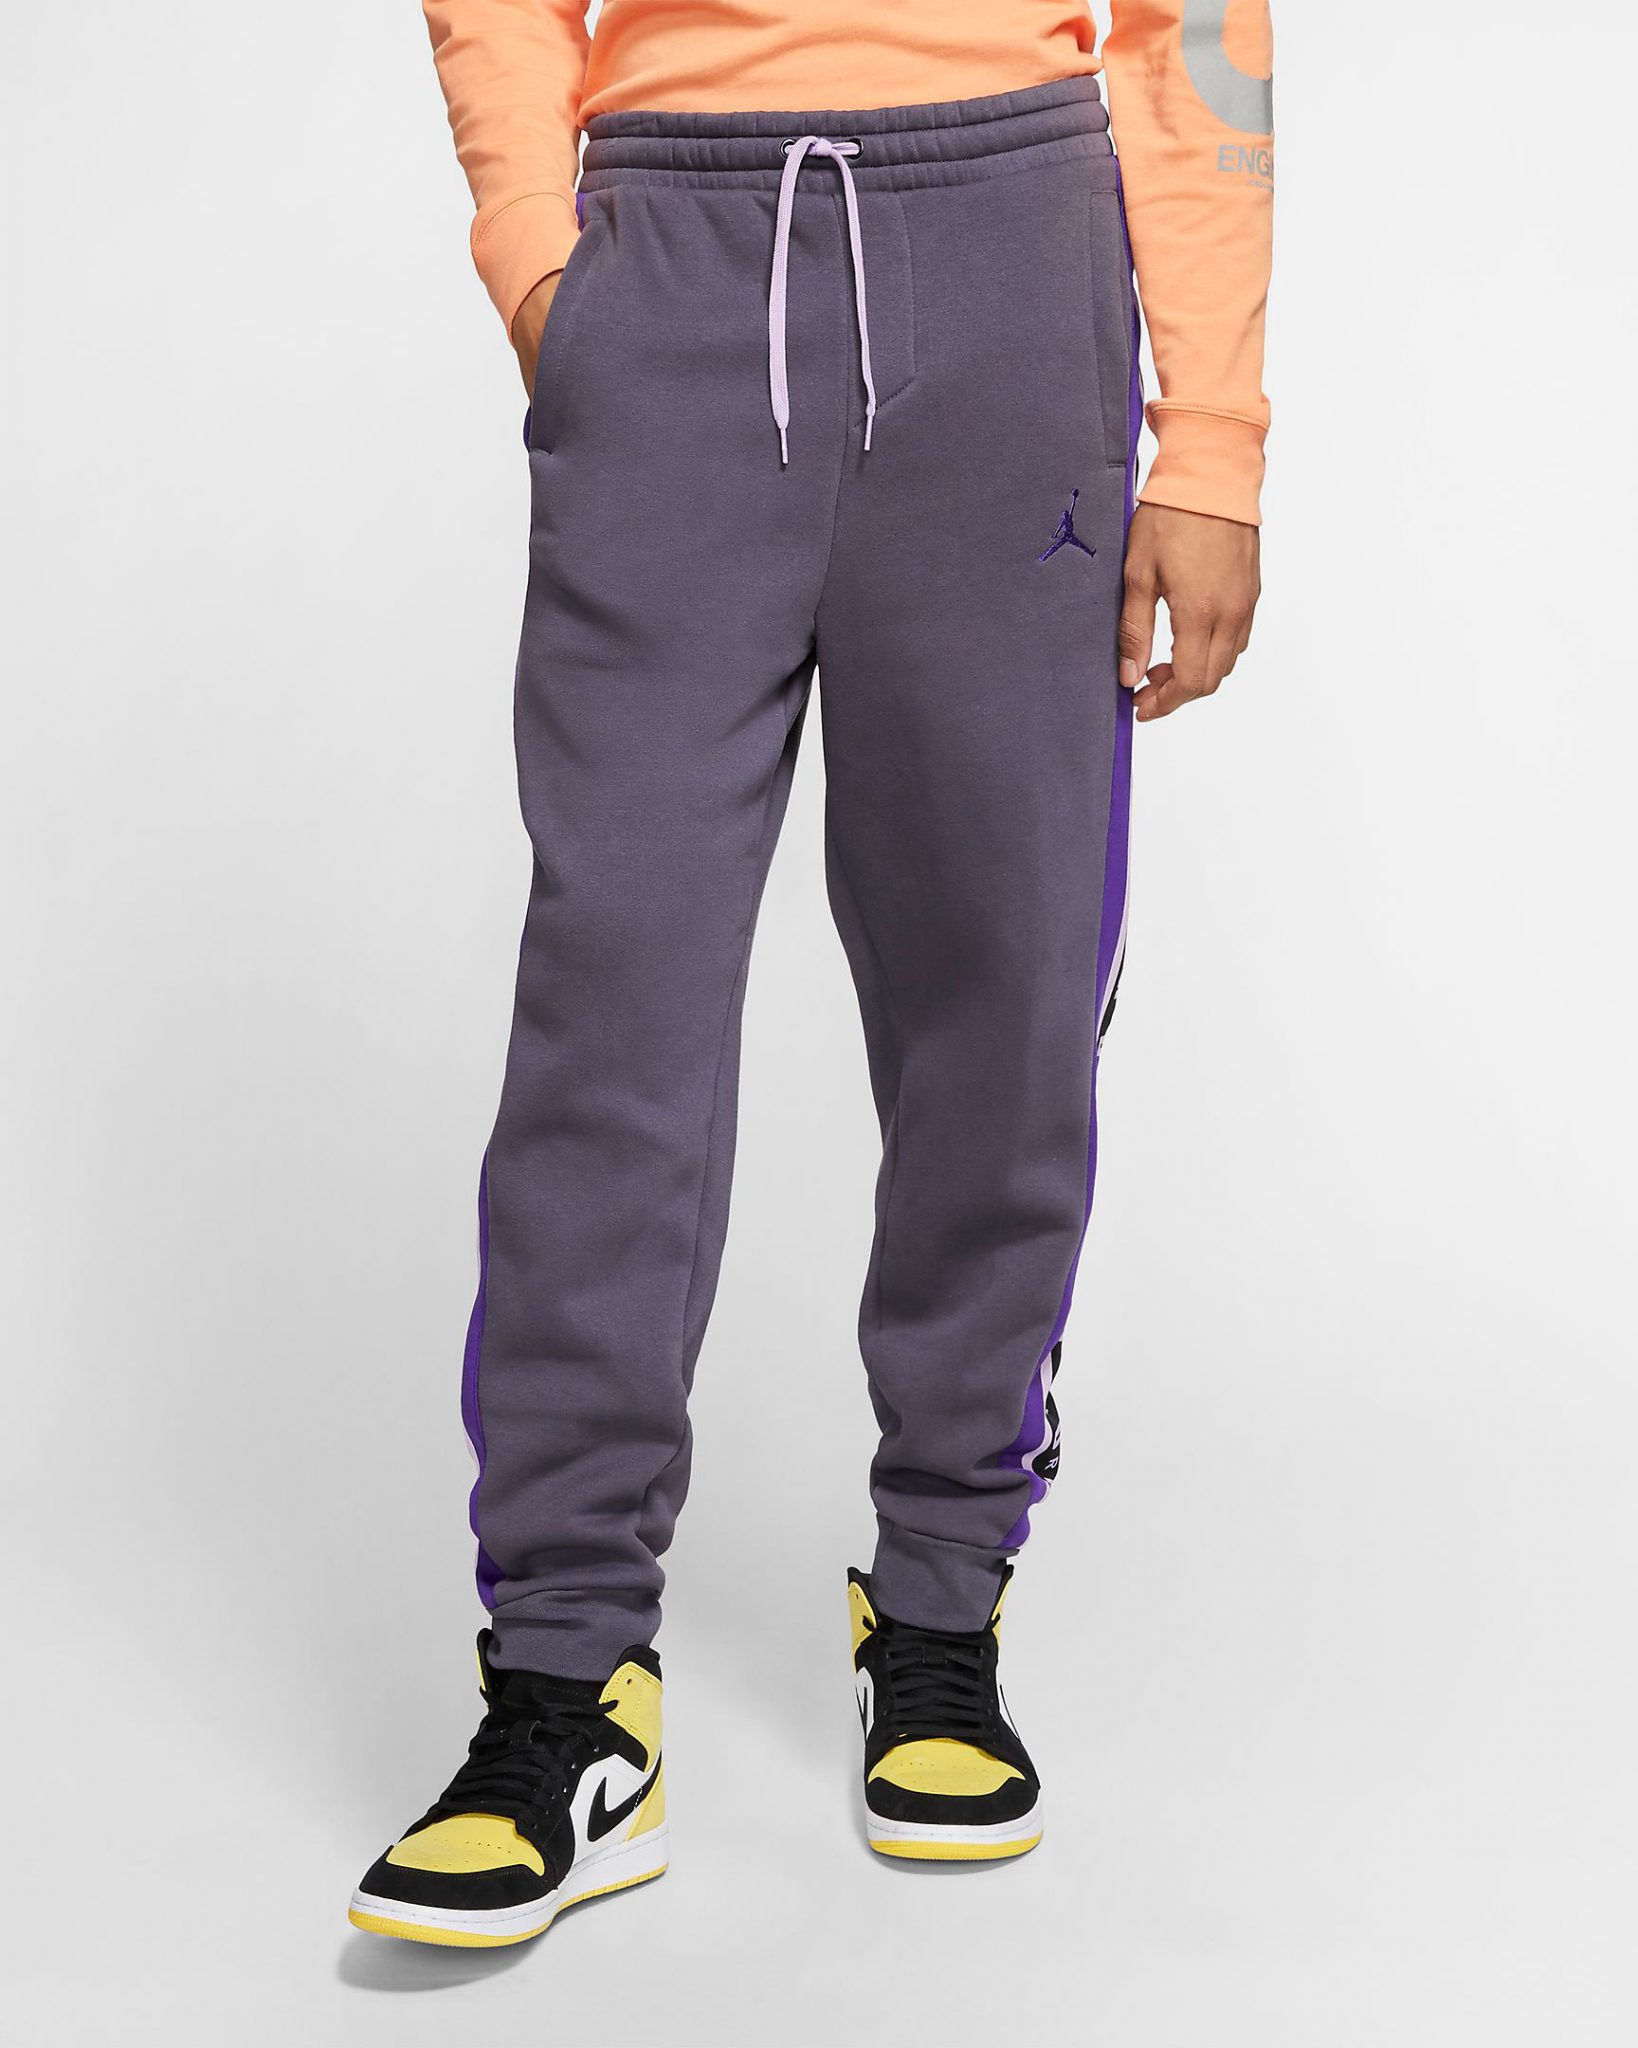 Air Jordan 4 Metallic Purple Clothing Match | SneakerFits.com